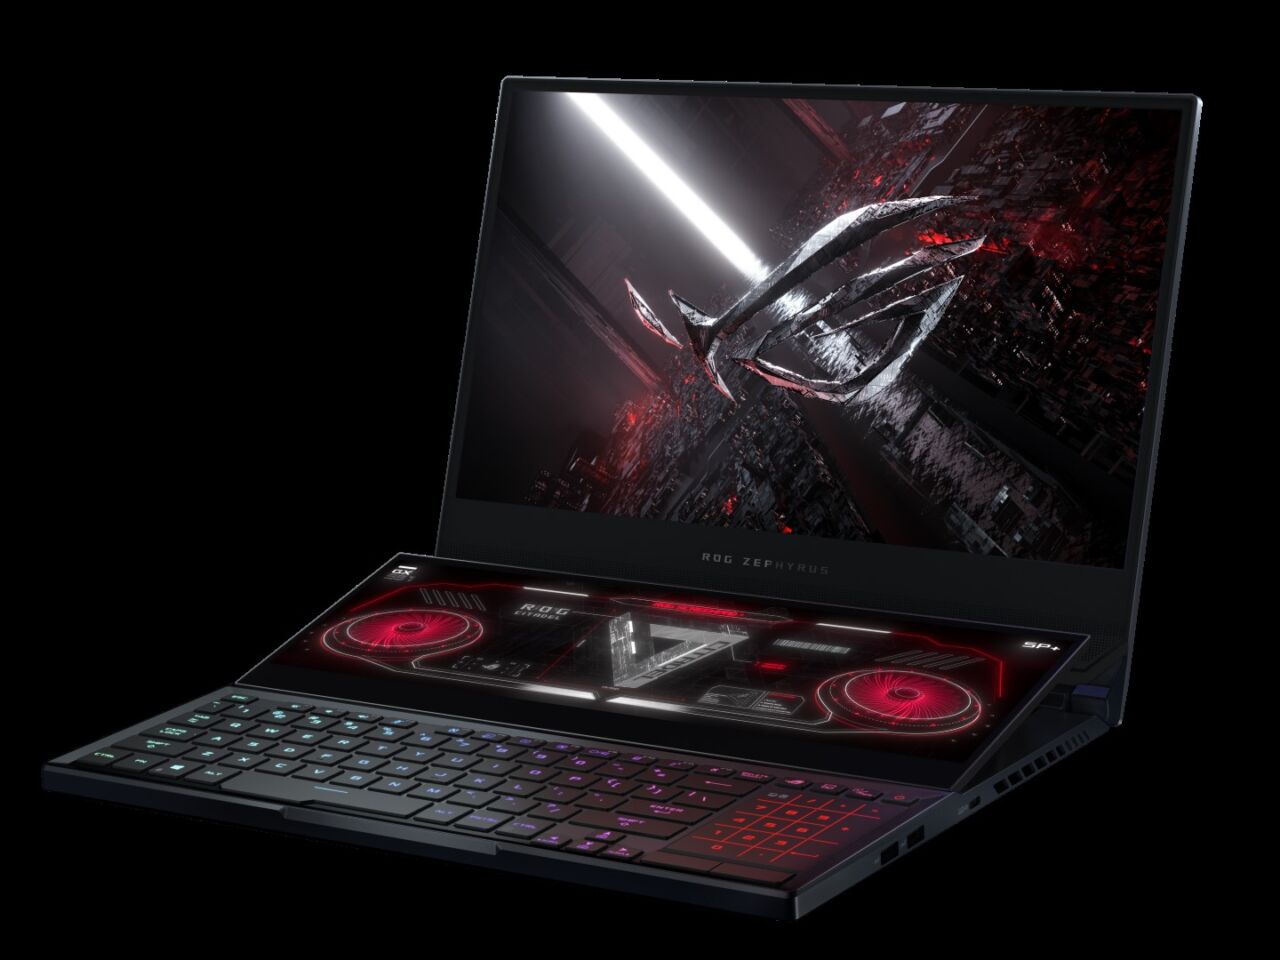 Asus ROG Zephyrus: high-end gaming laptops.